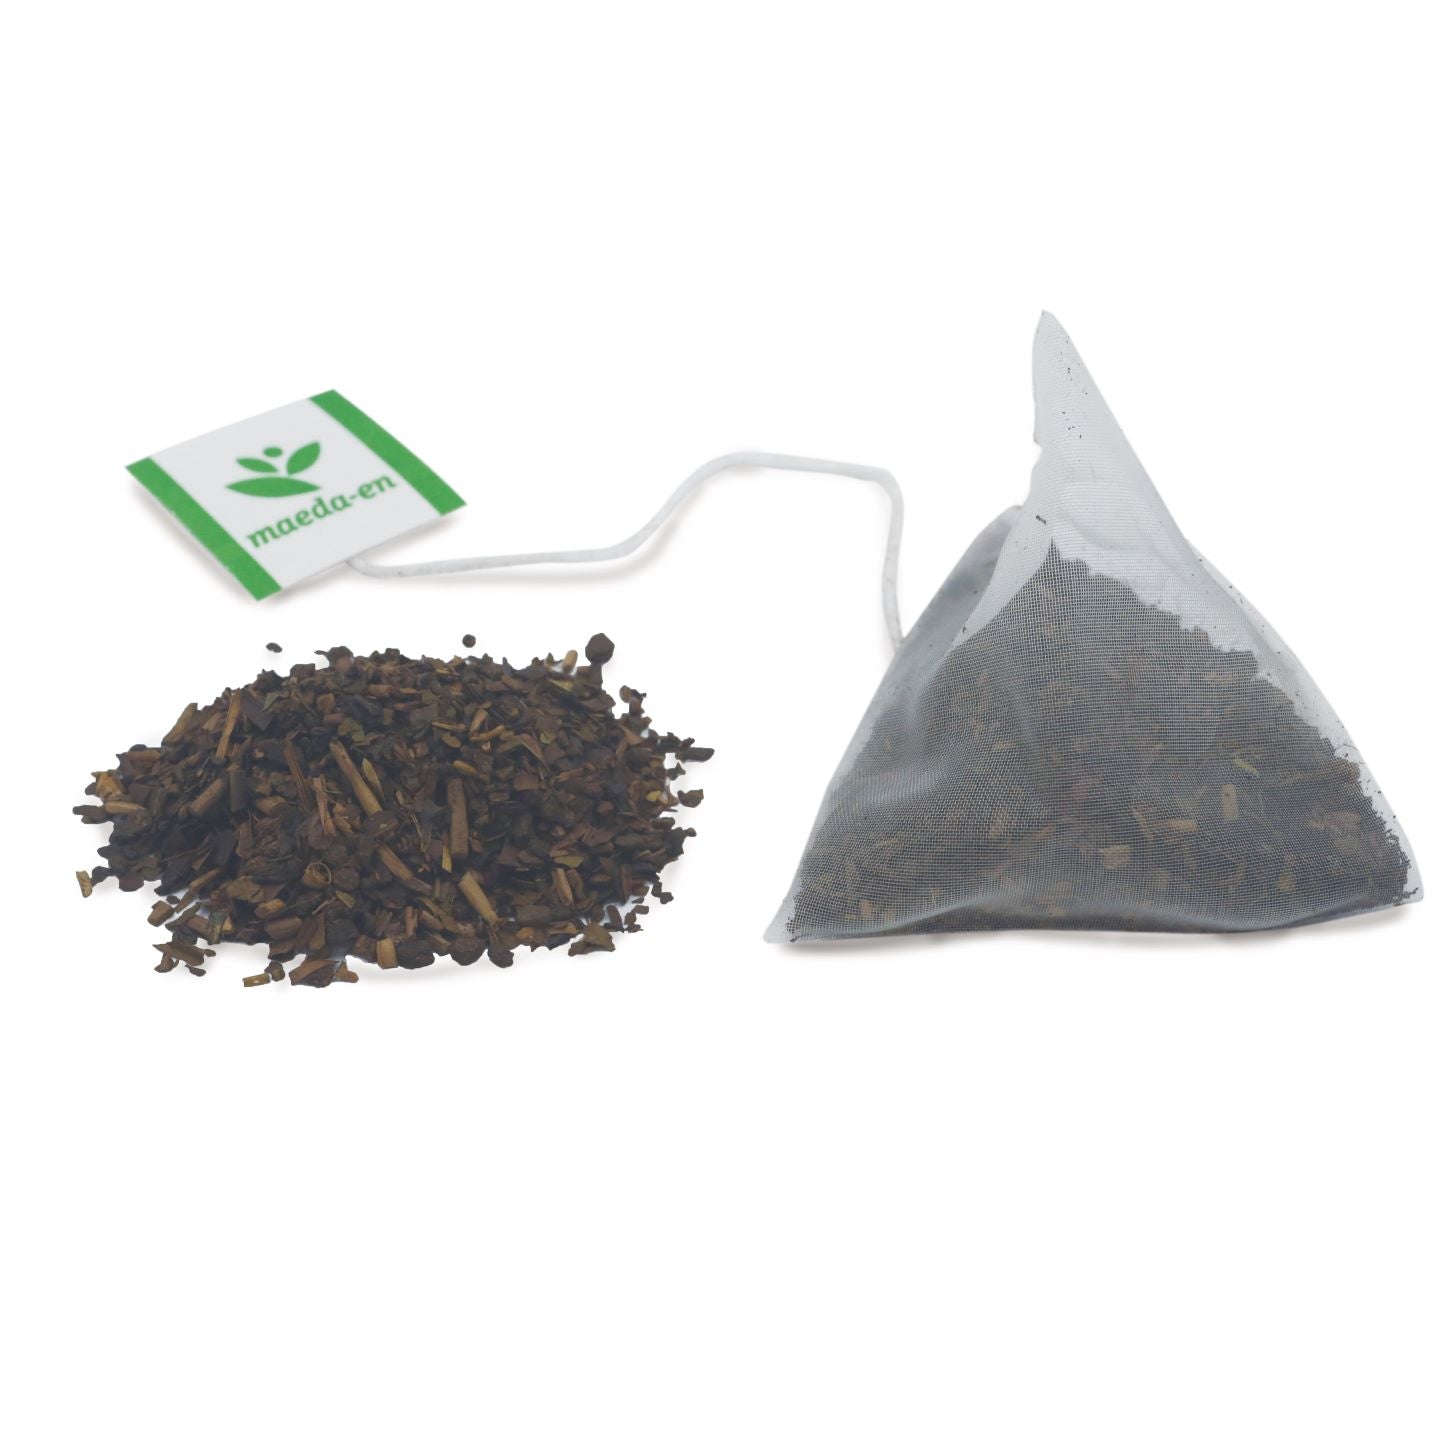 Premium Houji-cha Roasted Green Tea Tea Bags - 10bags Case (12/case)